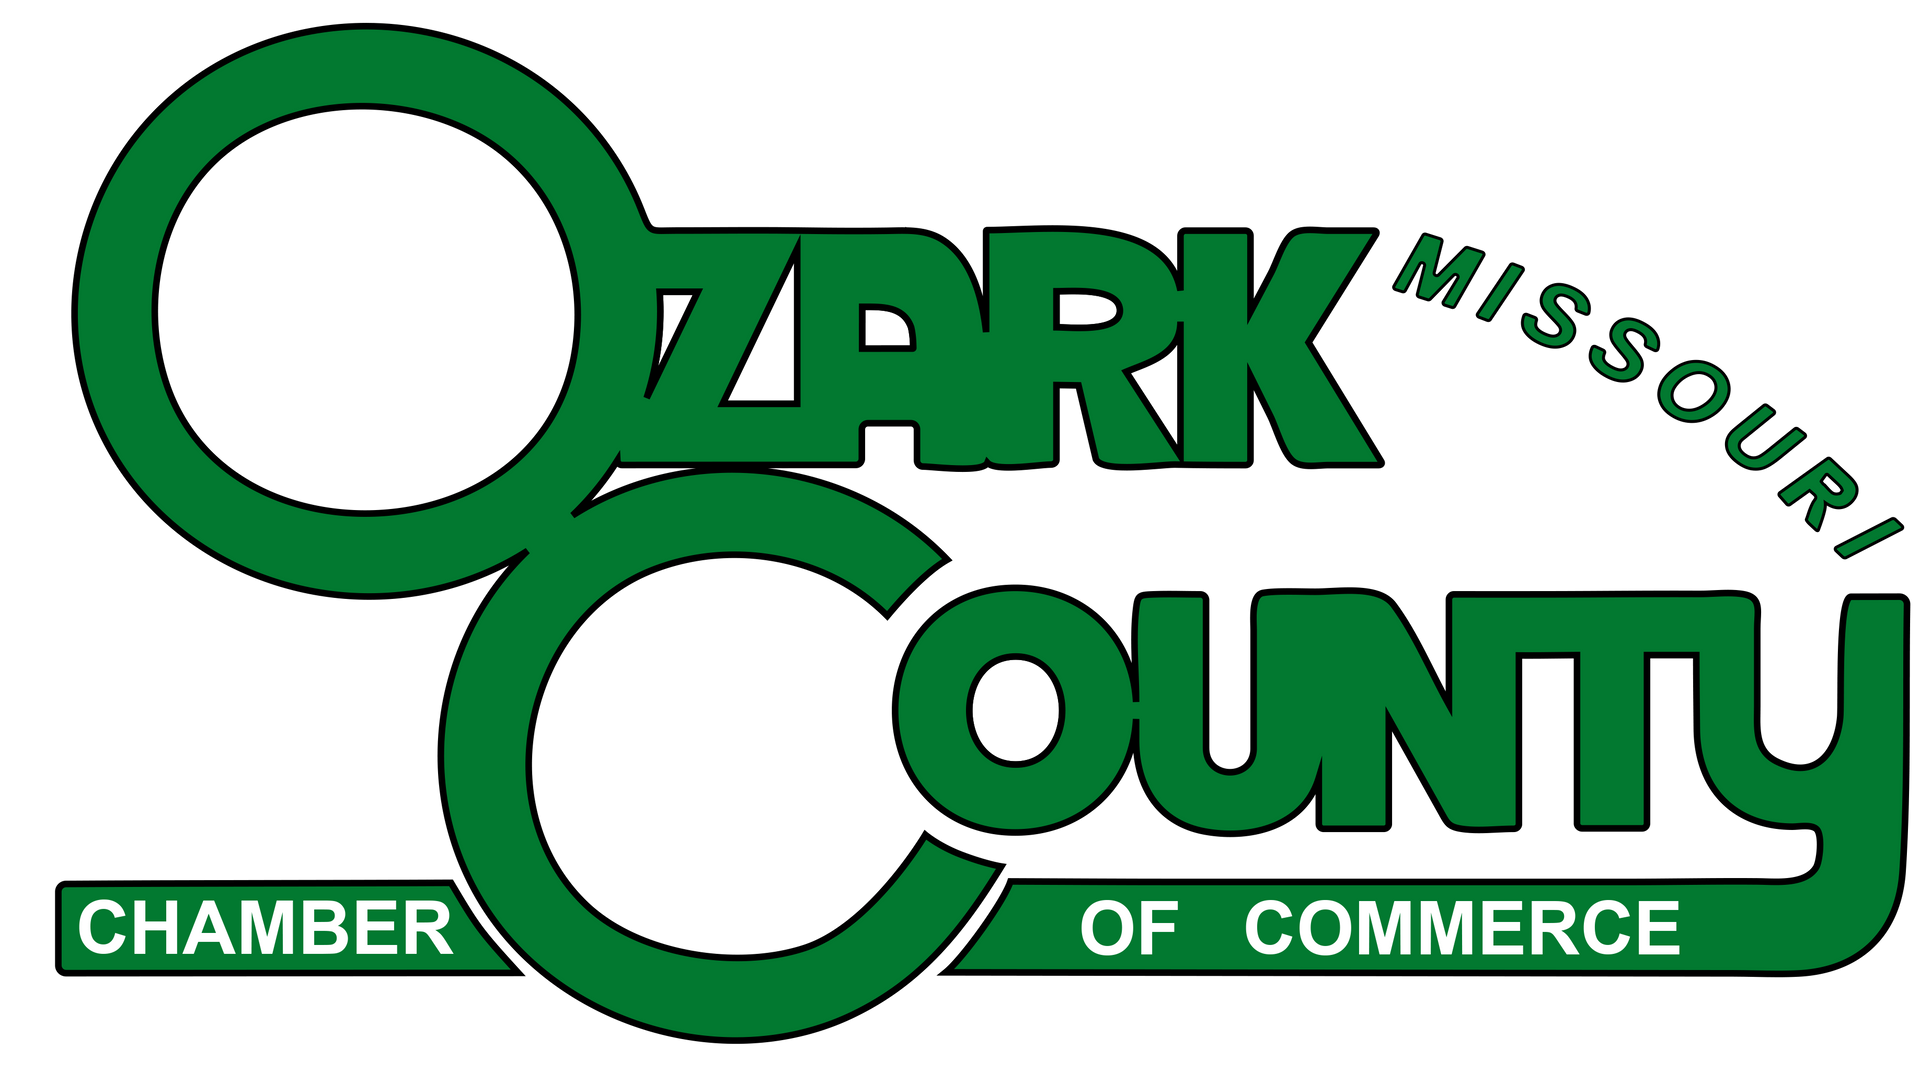 The logo for ozark county missouri chamber of commerce